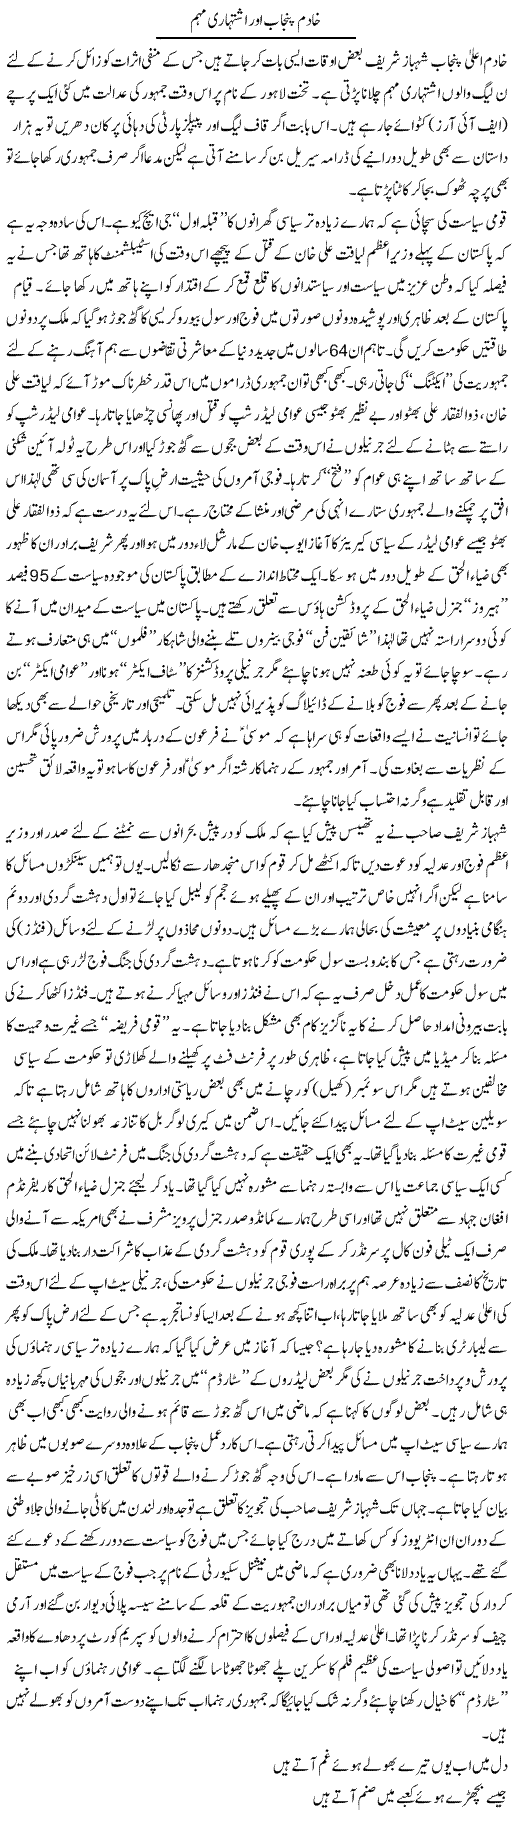 Shahbaz Sharif Express Column Tahir Sarwar 13  March 2011